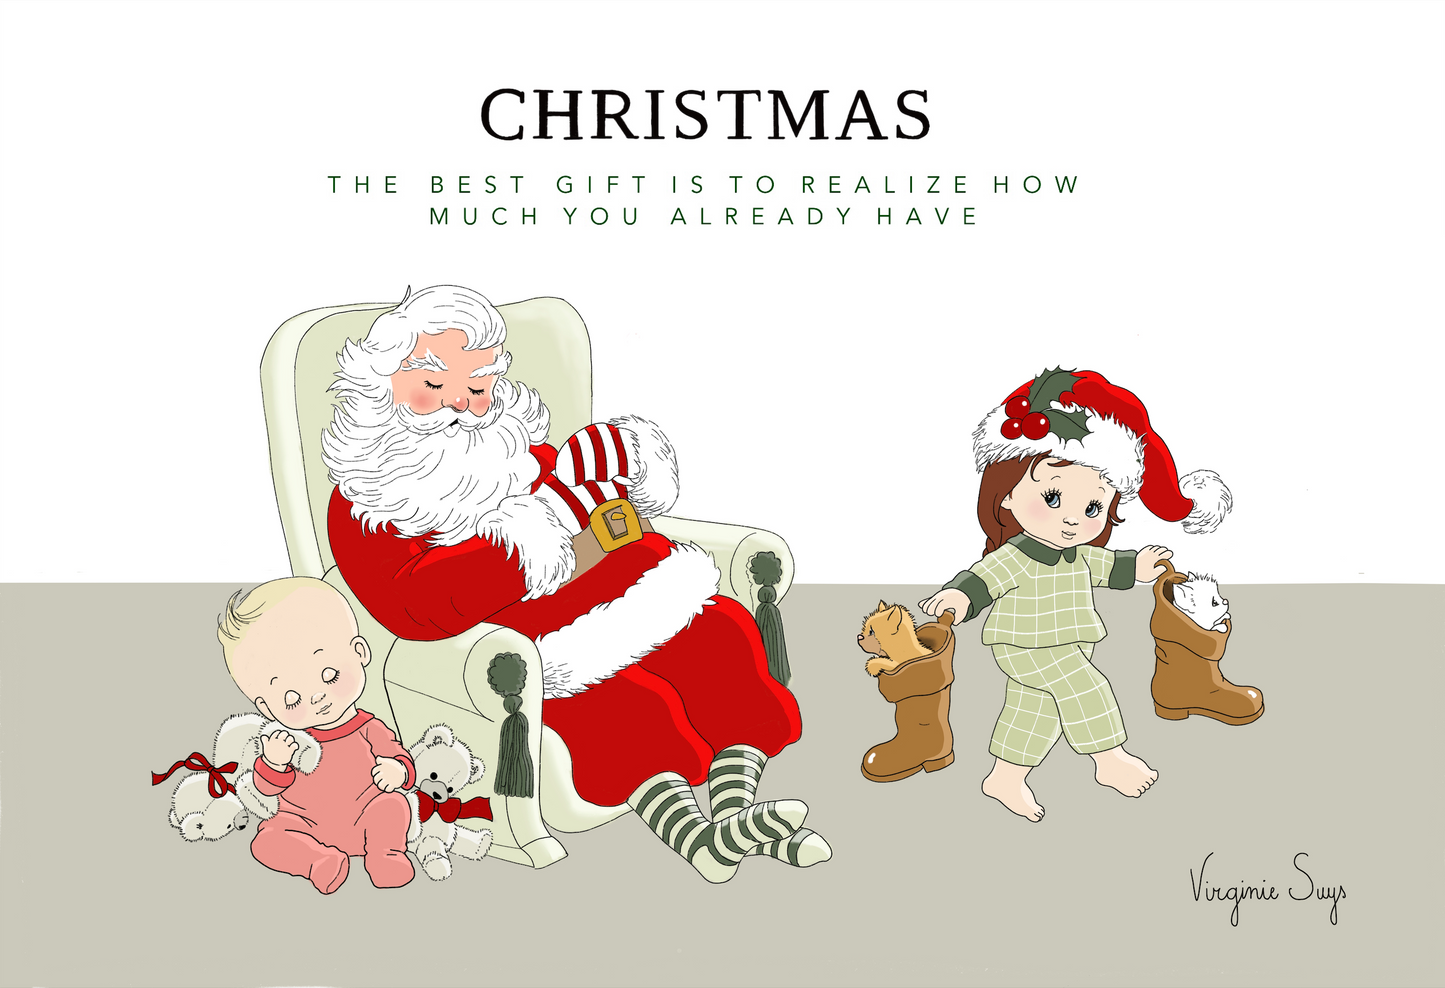 Christmascards - Steeling Santa's boots